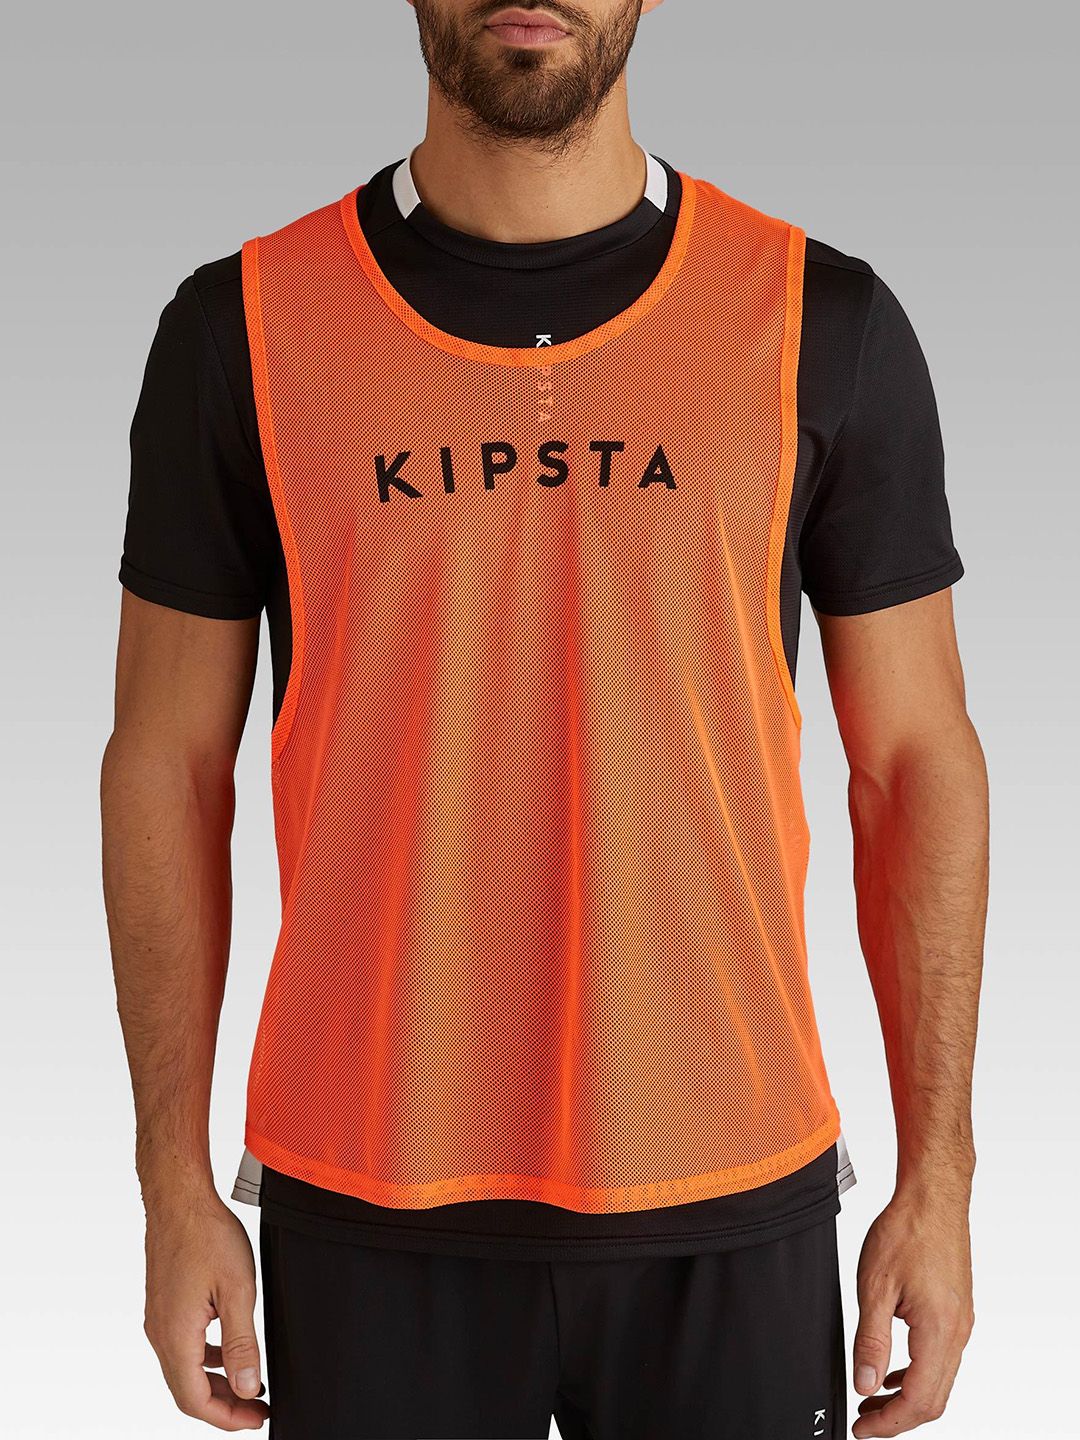 Kipsta By Decathlon Unisex Orange Printed Round Neck Football Bibs Price in India